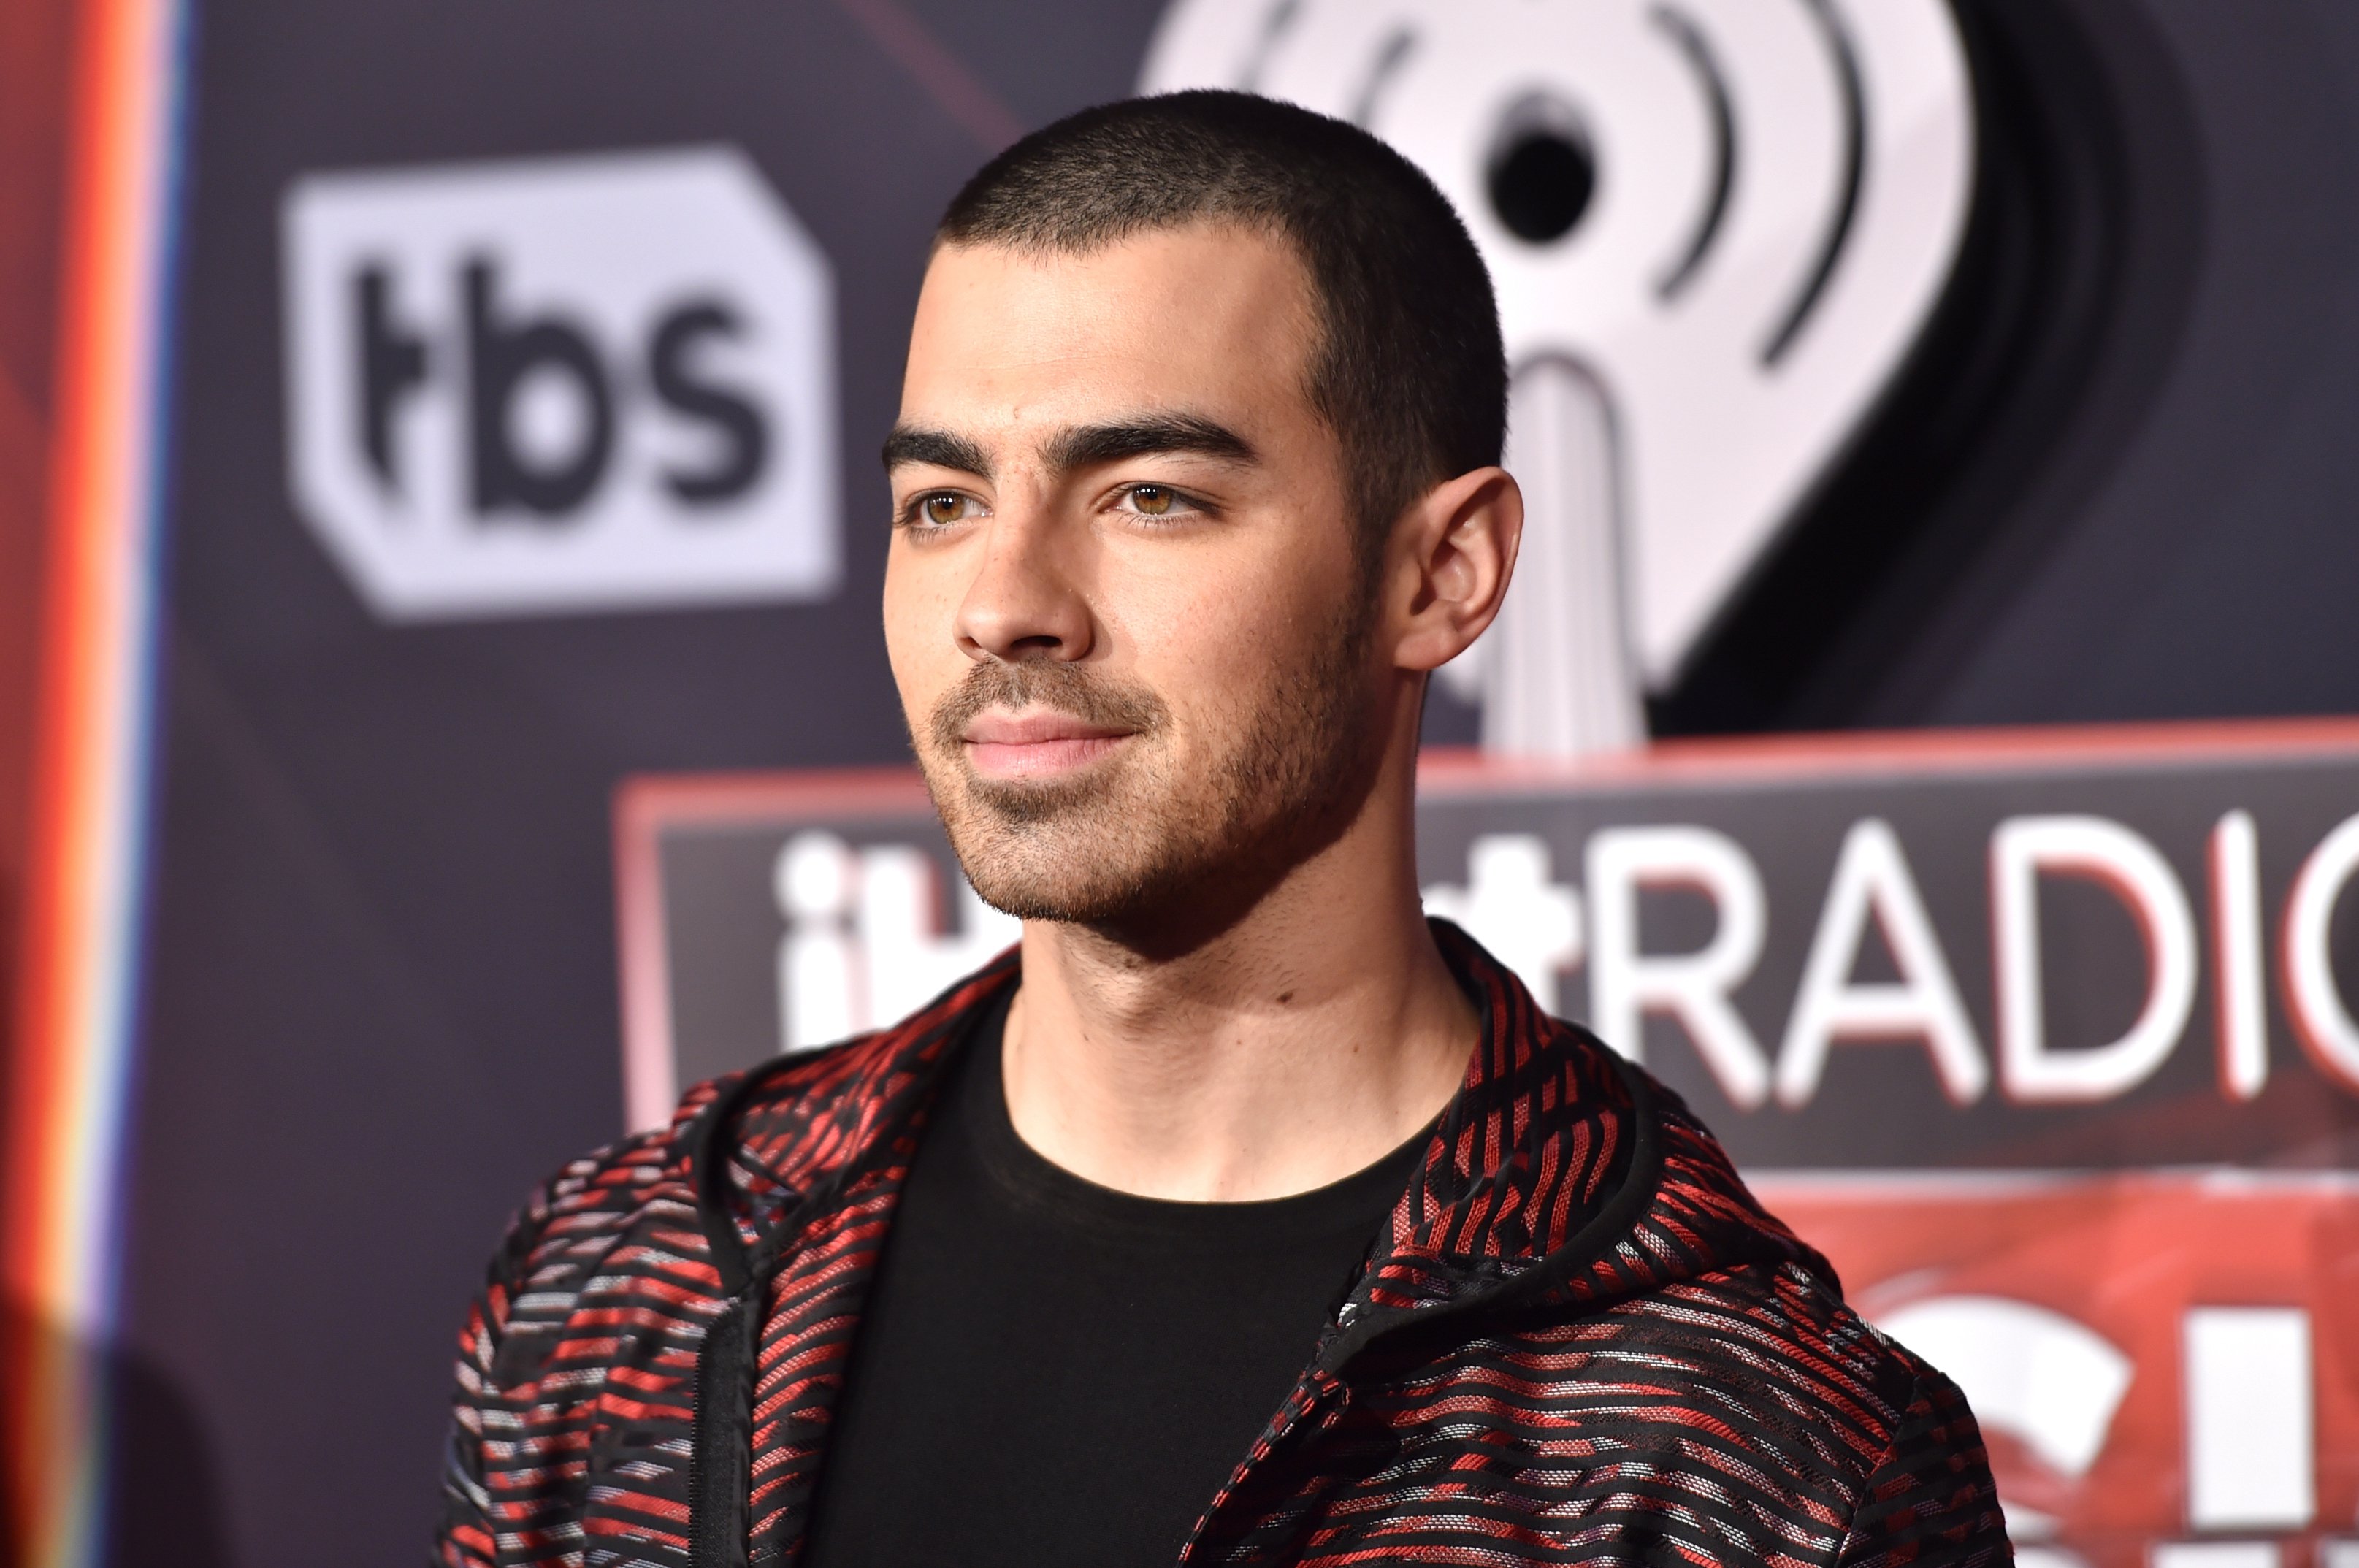 Joe Jonas' Blue Hair: Singer Shows Off New Look at 2015 iHeartRadio Music Awards - wide 6